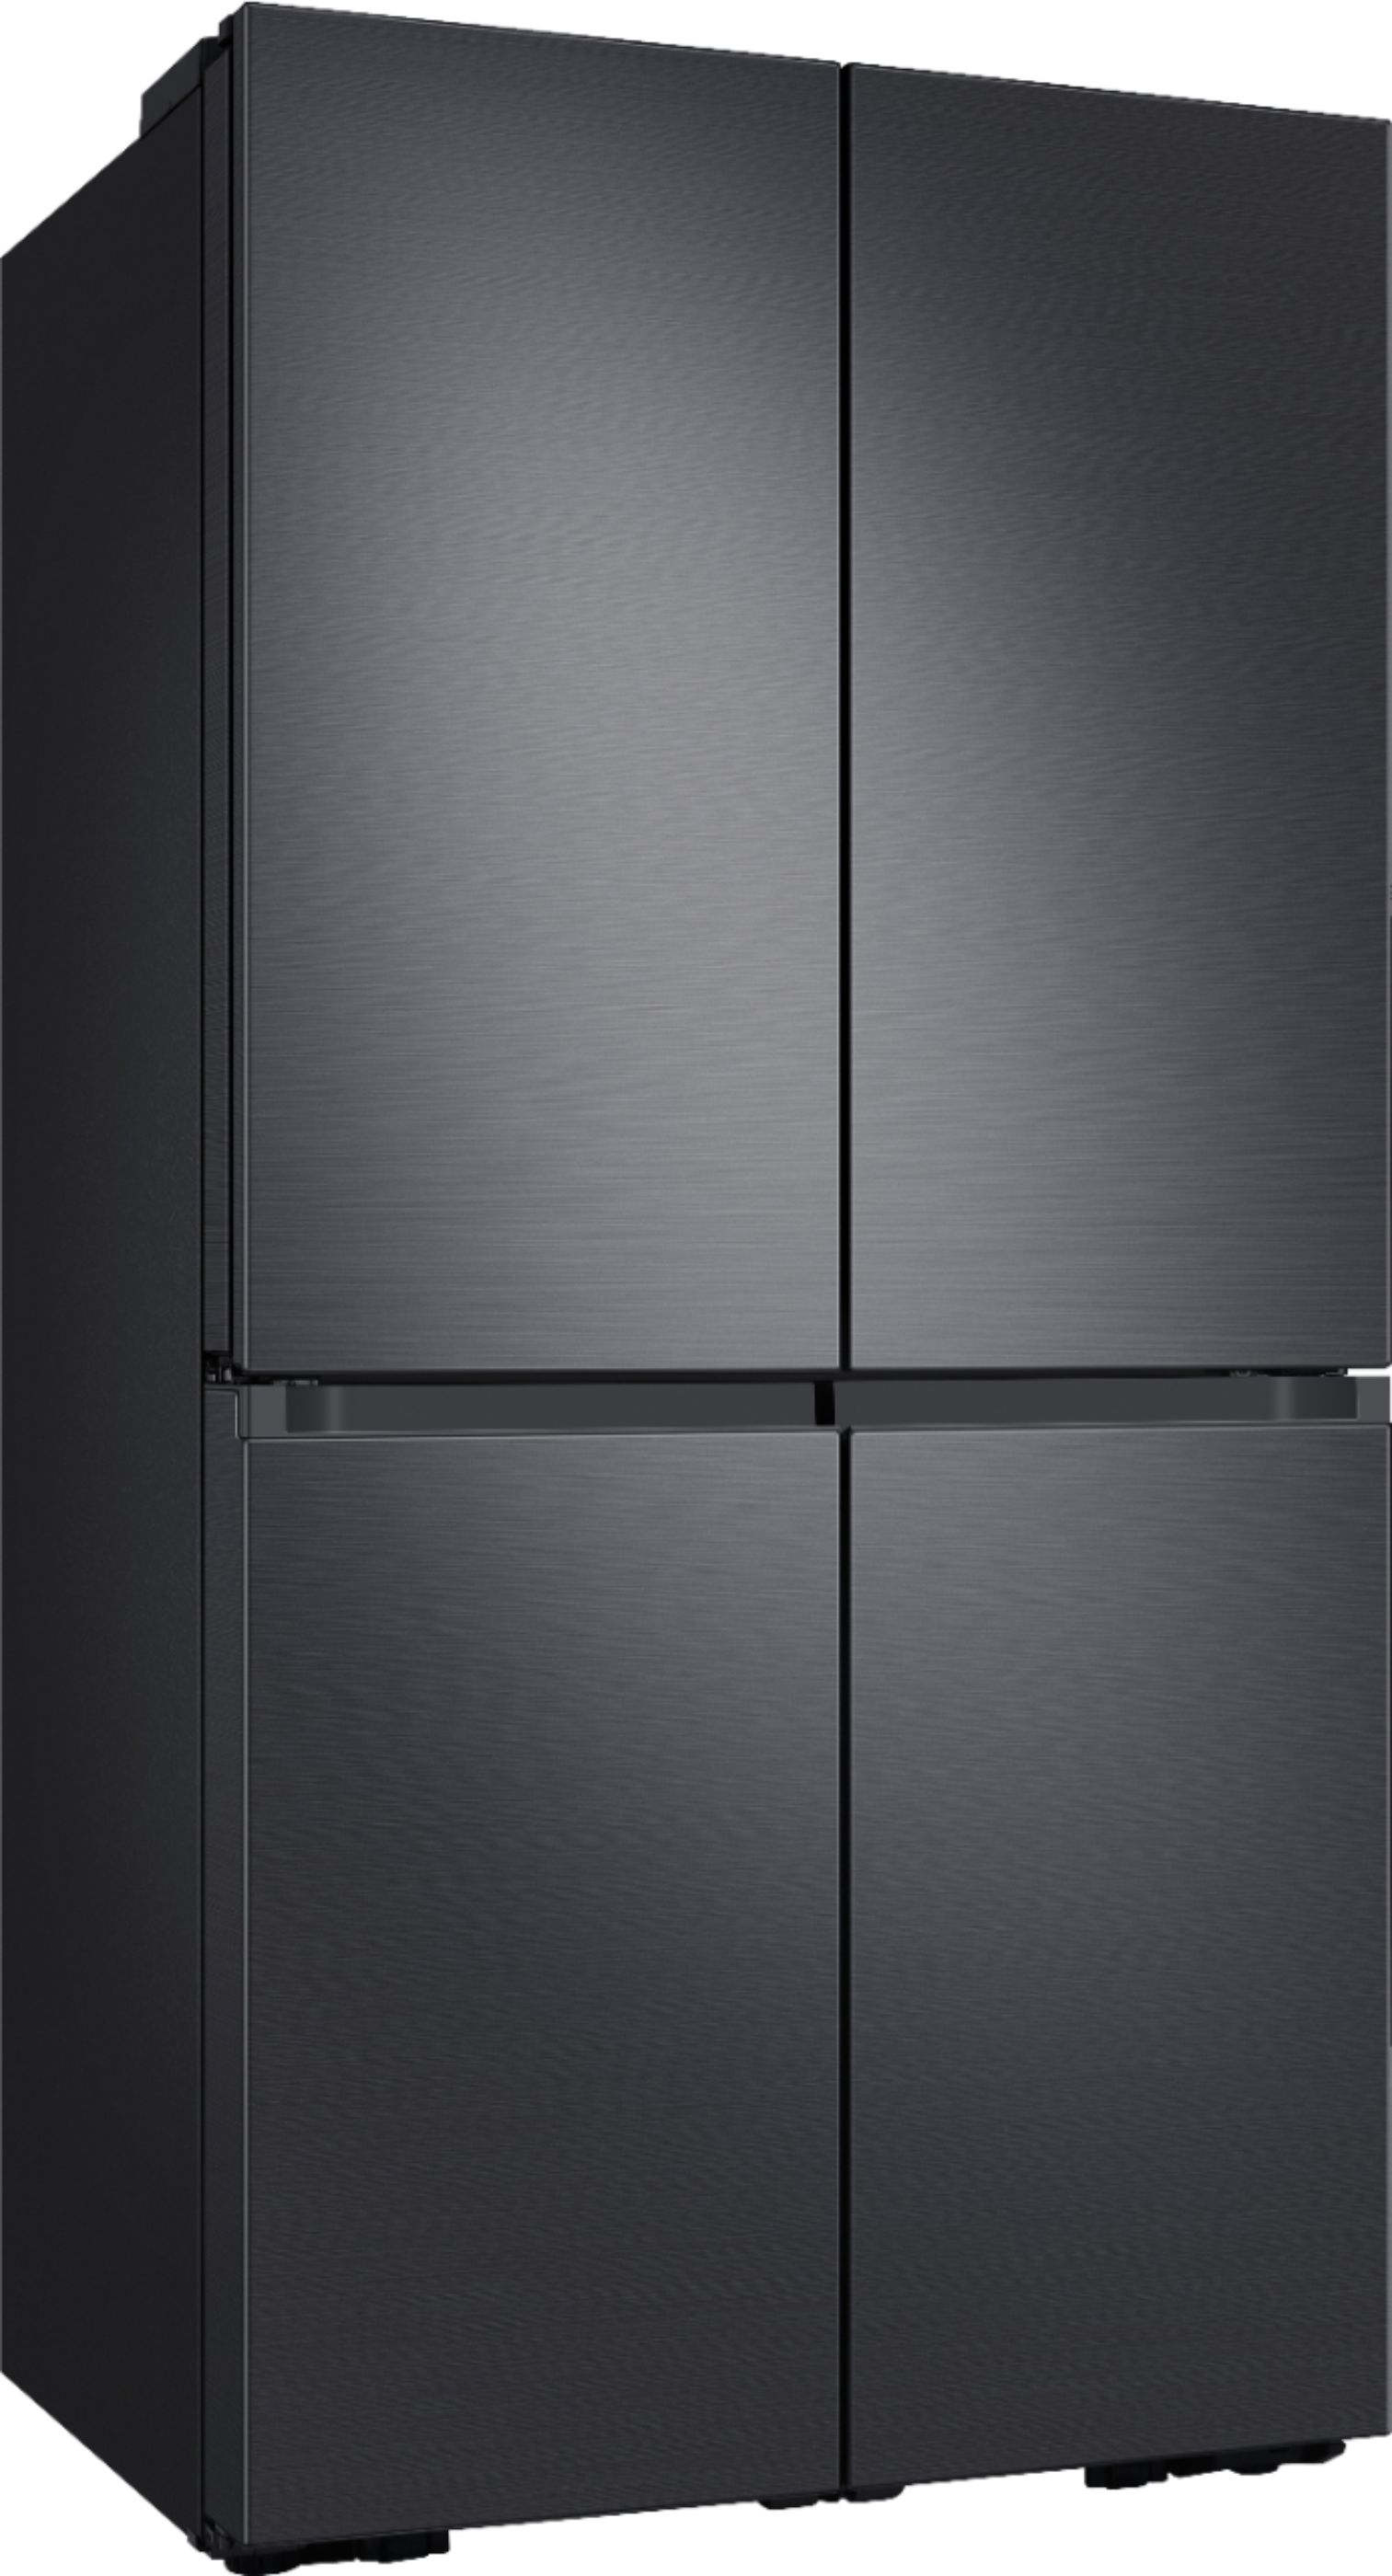 Left View: Samsung - Bespoke 23 cu. ft. Counter Depth 4-Door French Door Refrigerator with Beverage Center - Morning blue glass